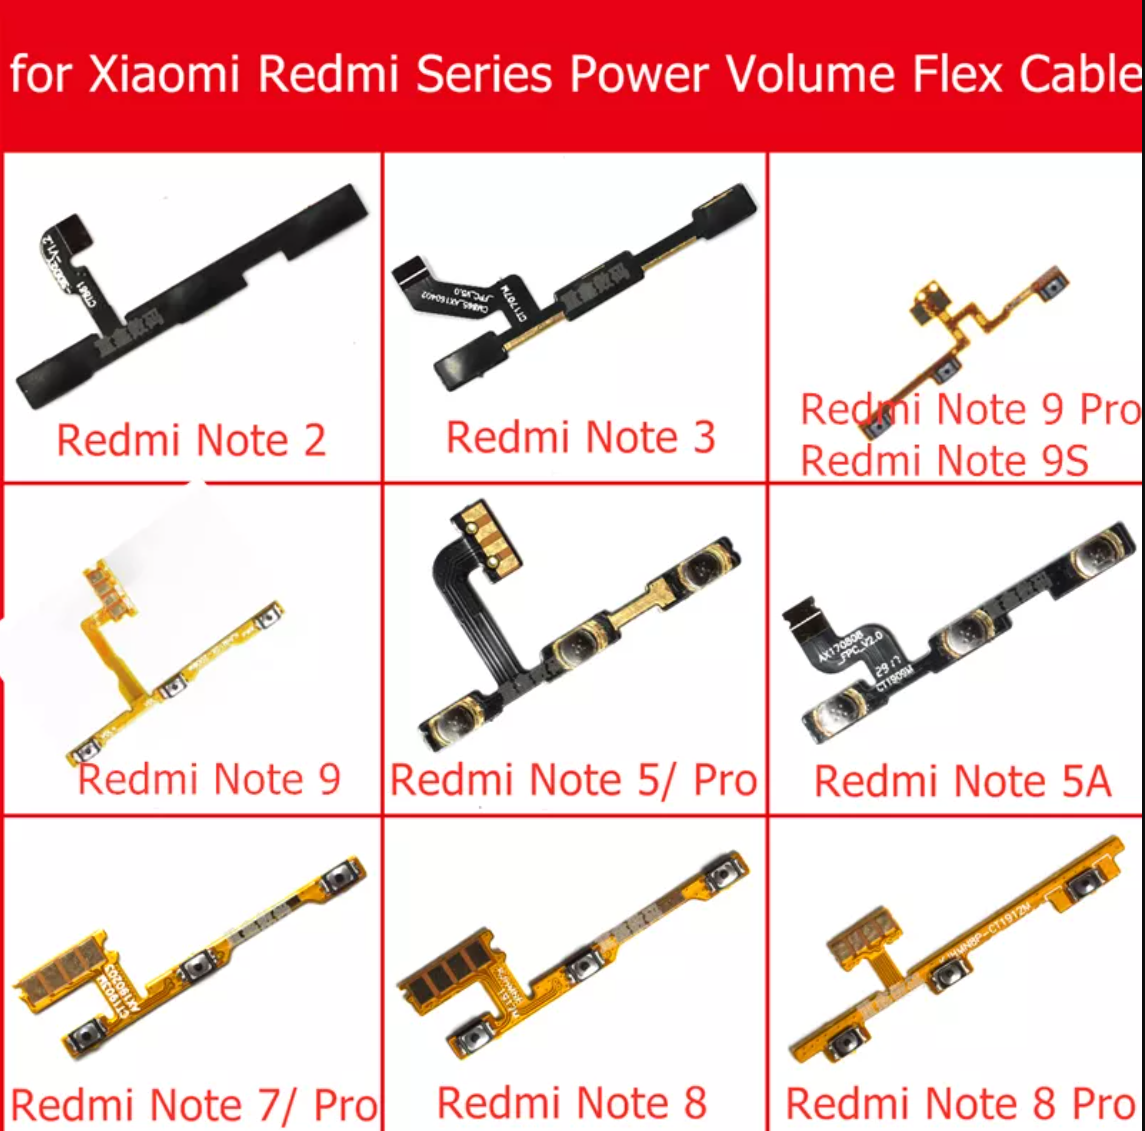 Flex Volume Xiaomi redmi note 9t